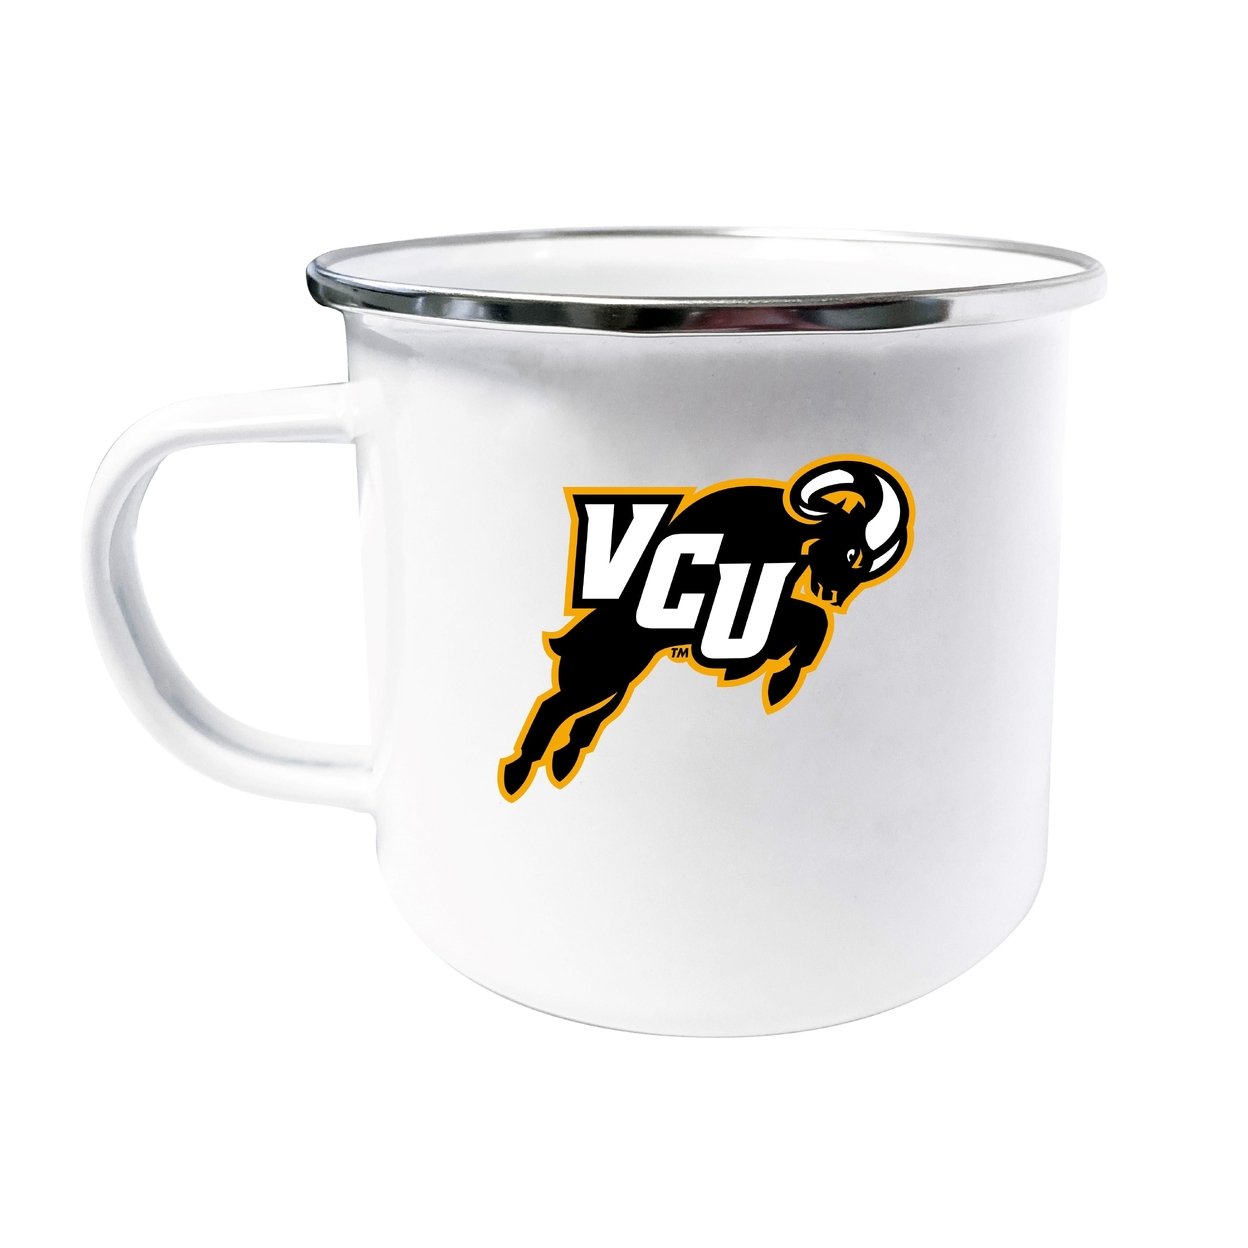 Virginia Commonwealth Tin Camper Coffee Mug - Choose Your Color - Navy